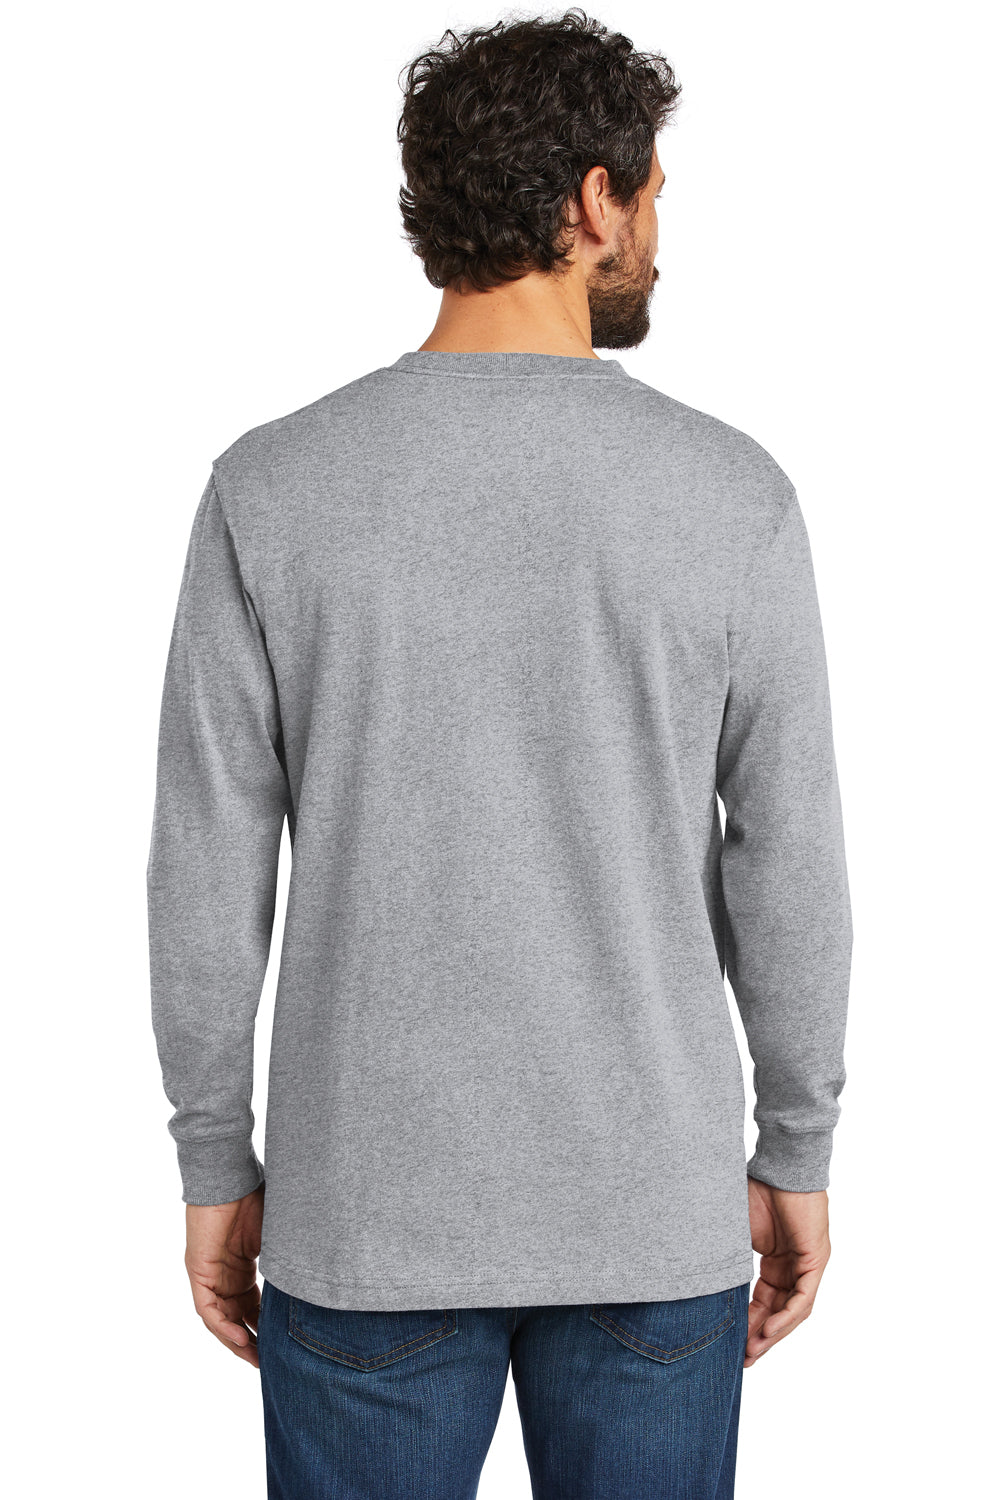 Carhartt CTK126 Mens Workwear Long Sleeve Crewneck T-Shirt w/ Pocket Heather Grey Model Back